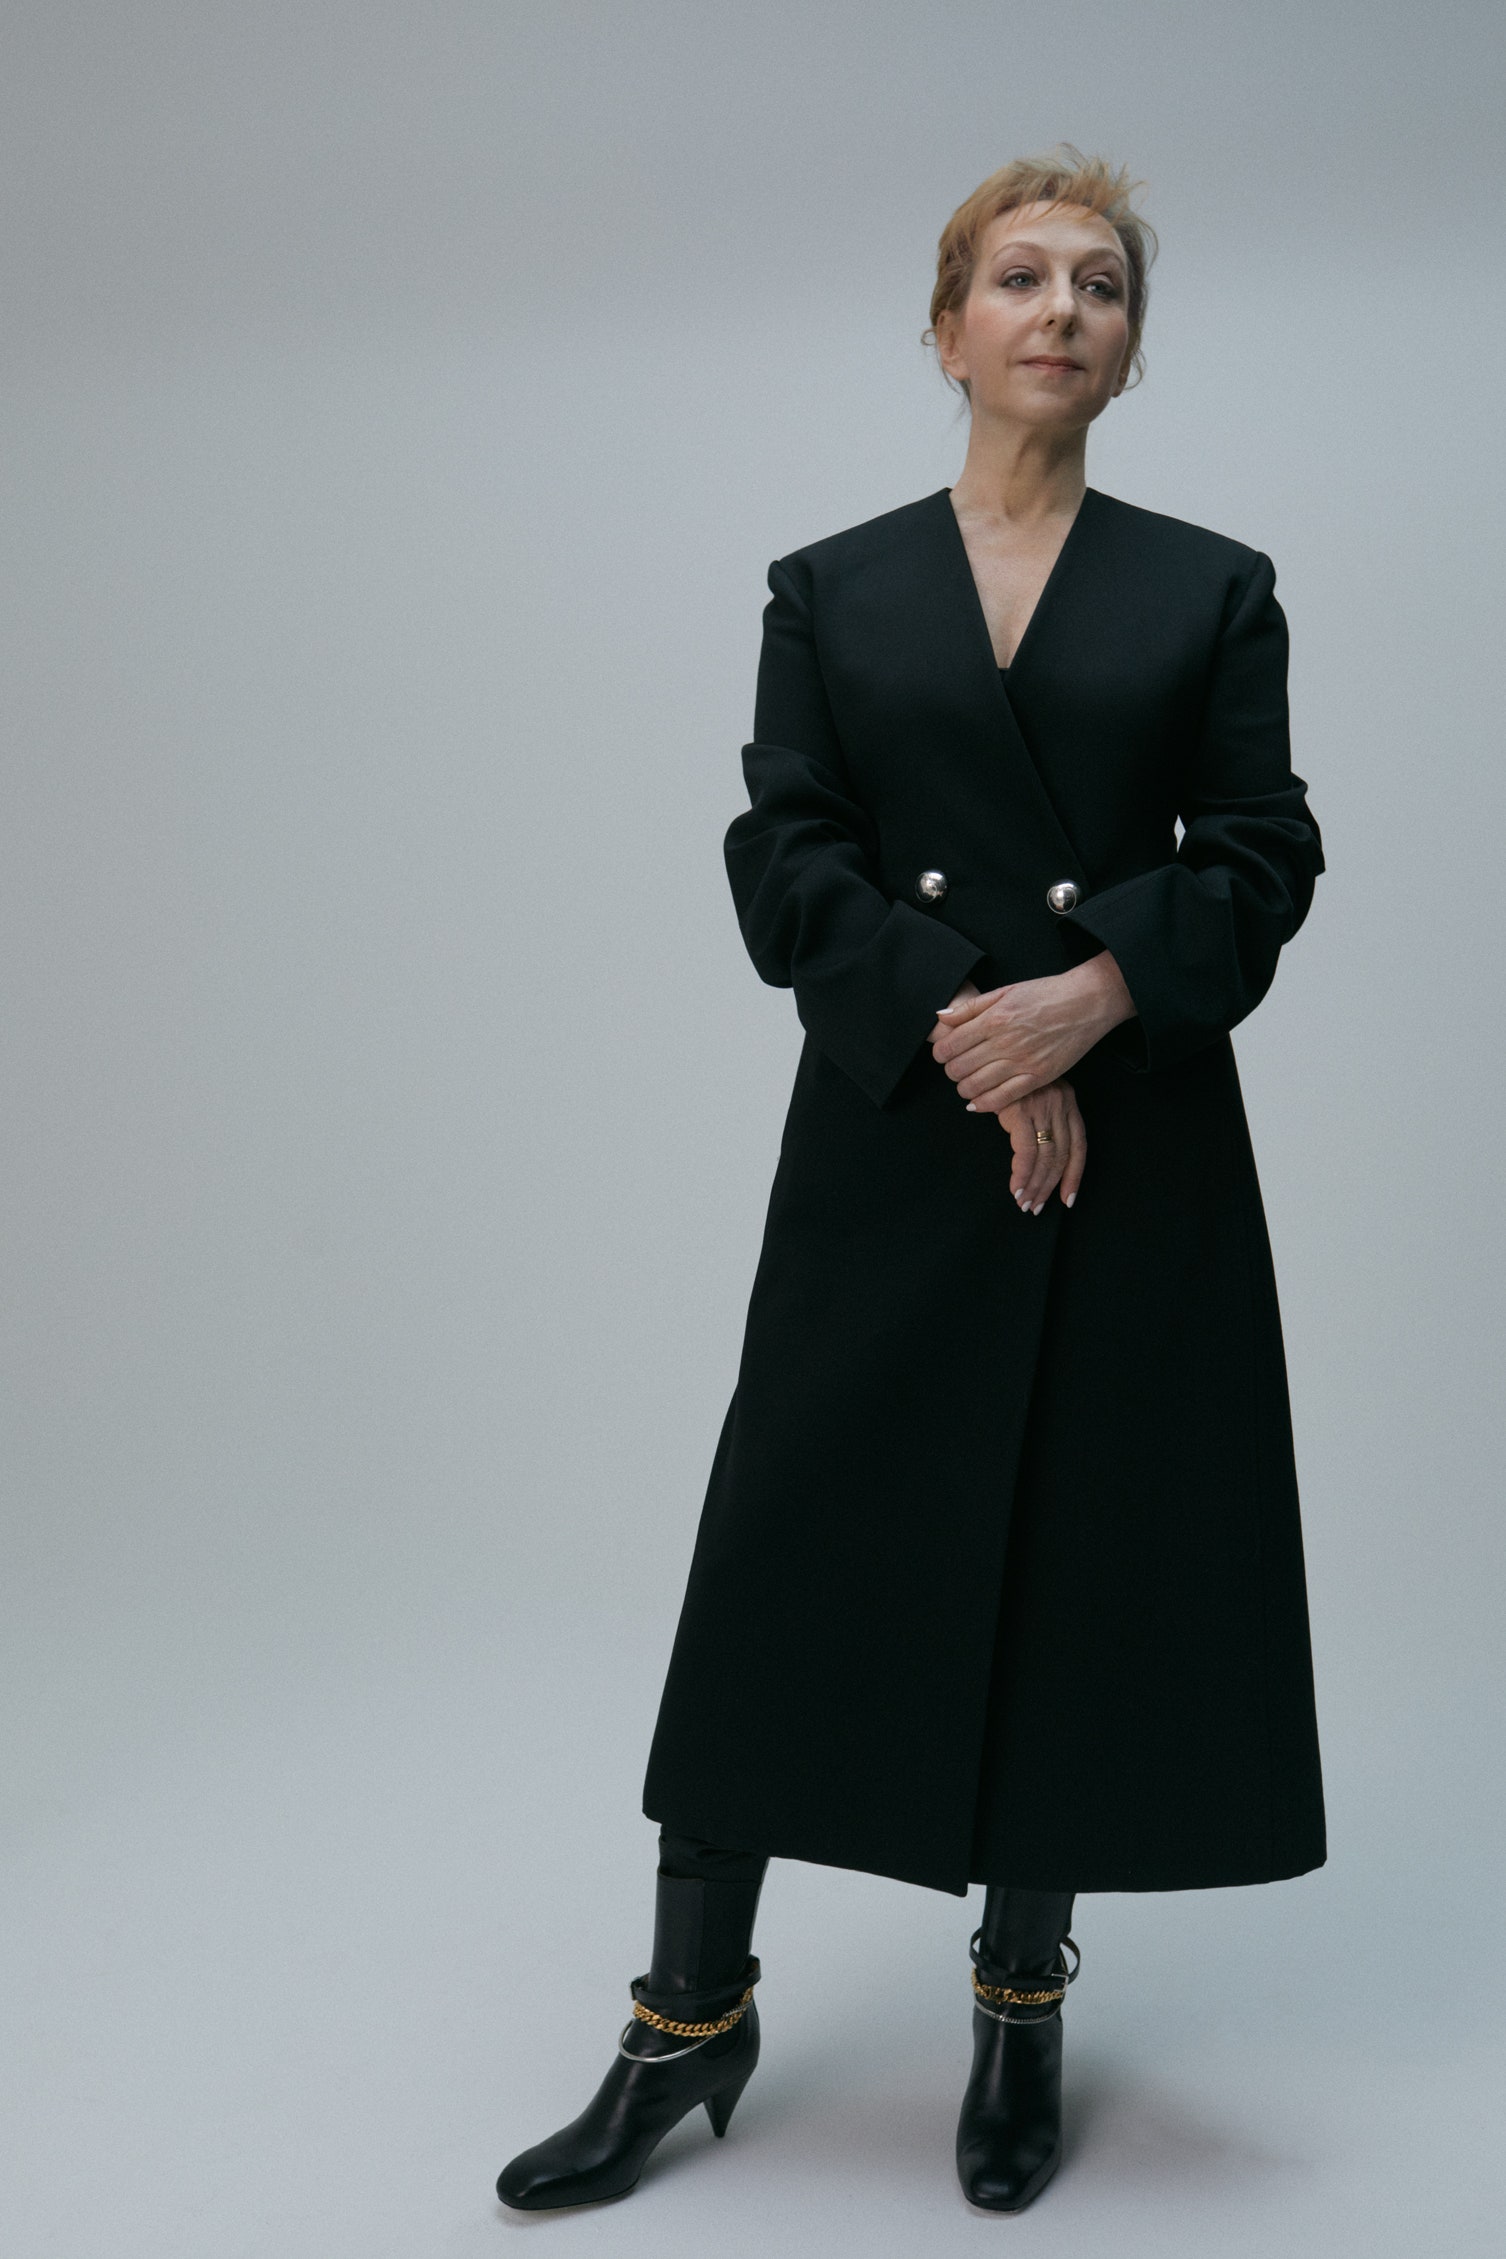 Maryana Lysenko wearing black long woollen coat and black leather boots